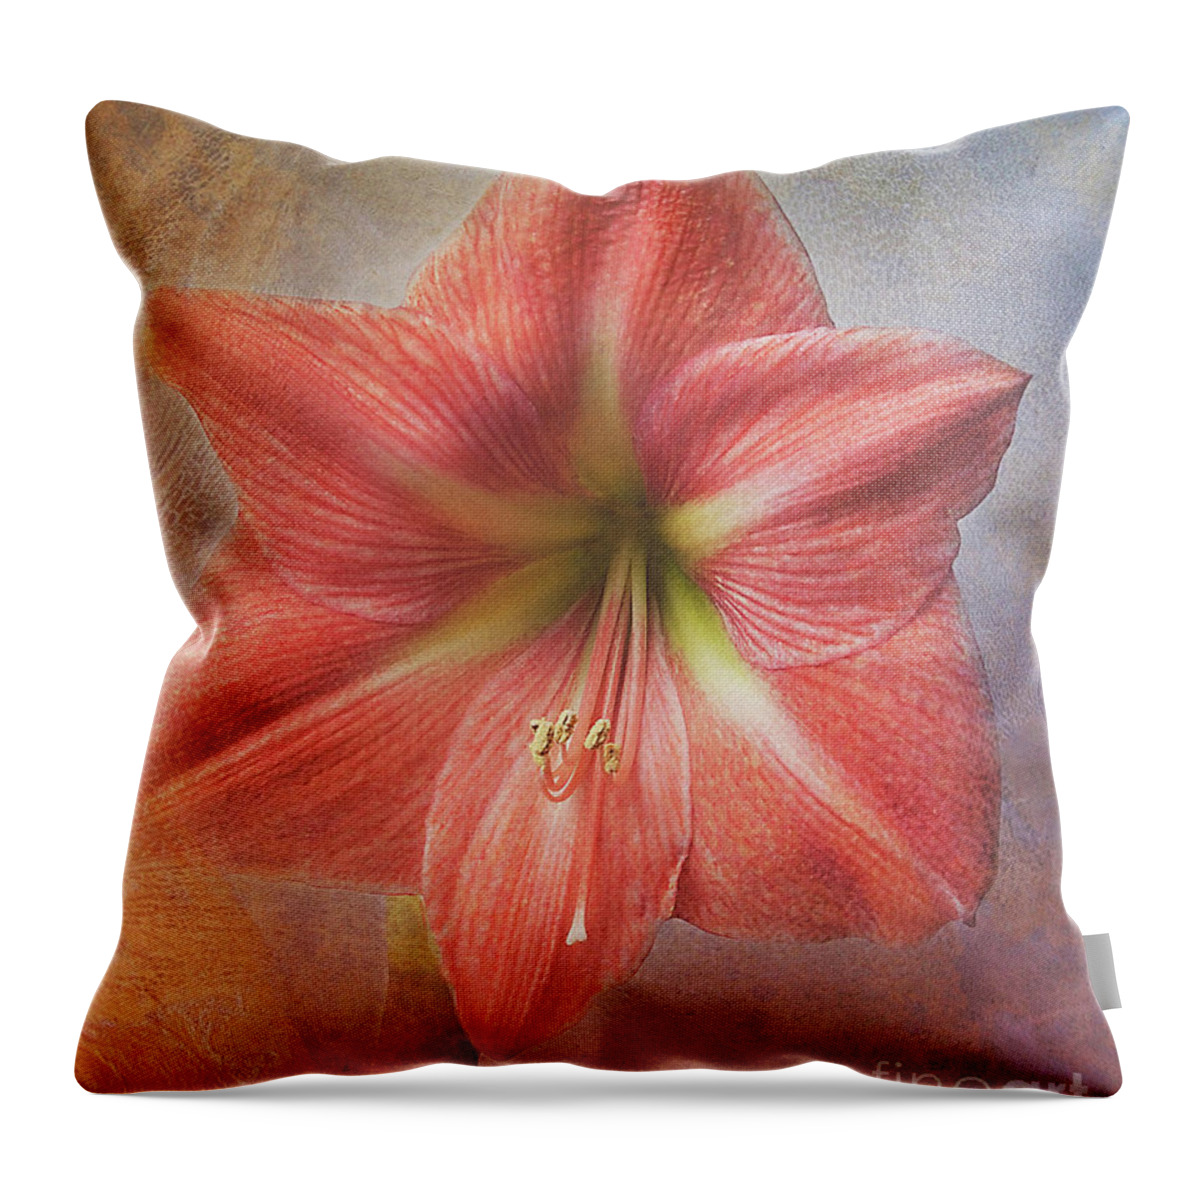 Flower Throw Pillow featuring the photograph Amaryllis 'Terra Cotta Star' by Ann Jacobson